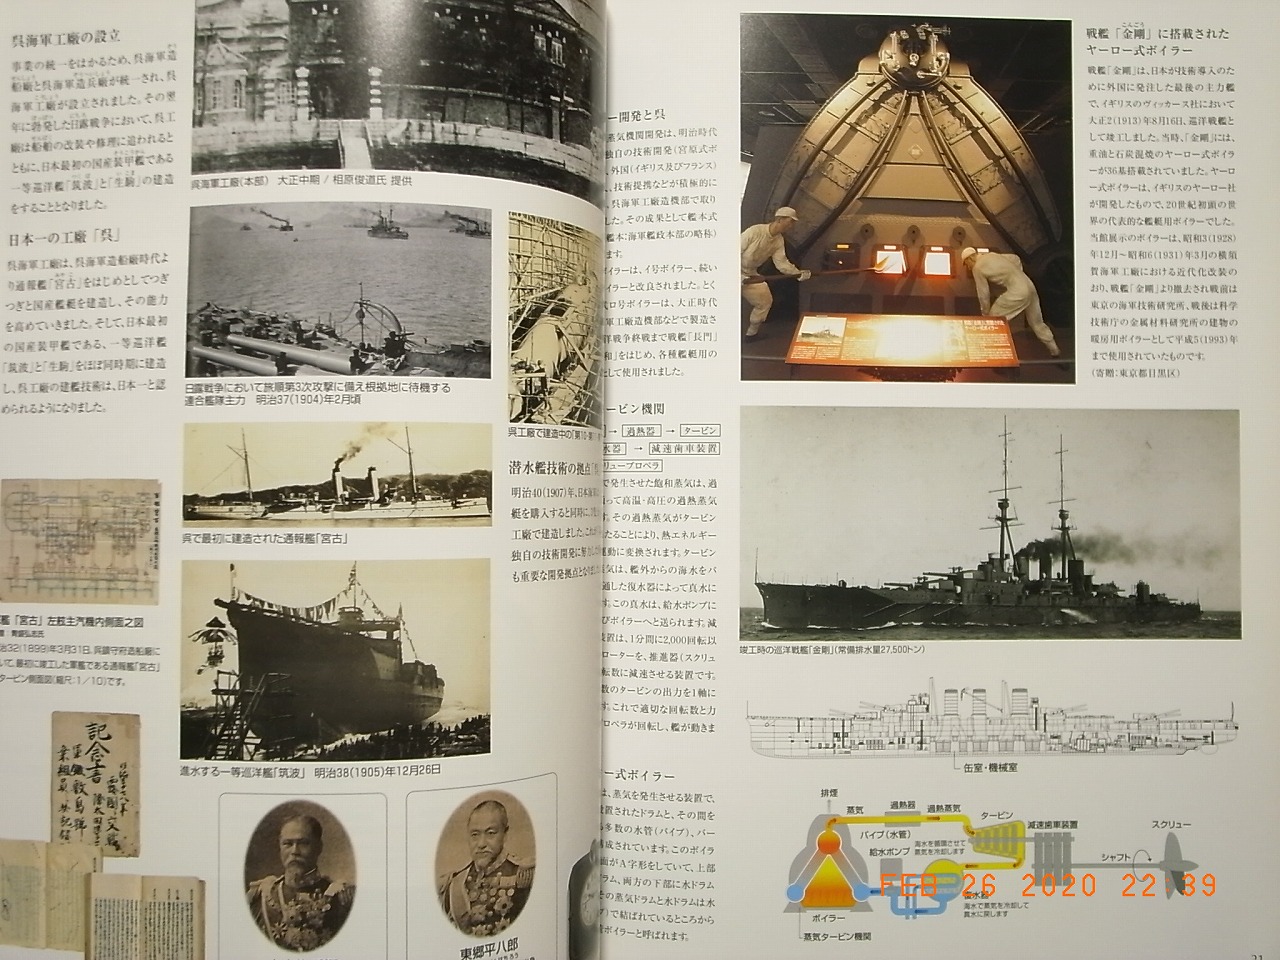 Ijn Bb Yamato Museum Official Guide Book Kure Maritime Museum Hiroshima Japan Rarebooksjapan Com